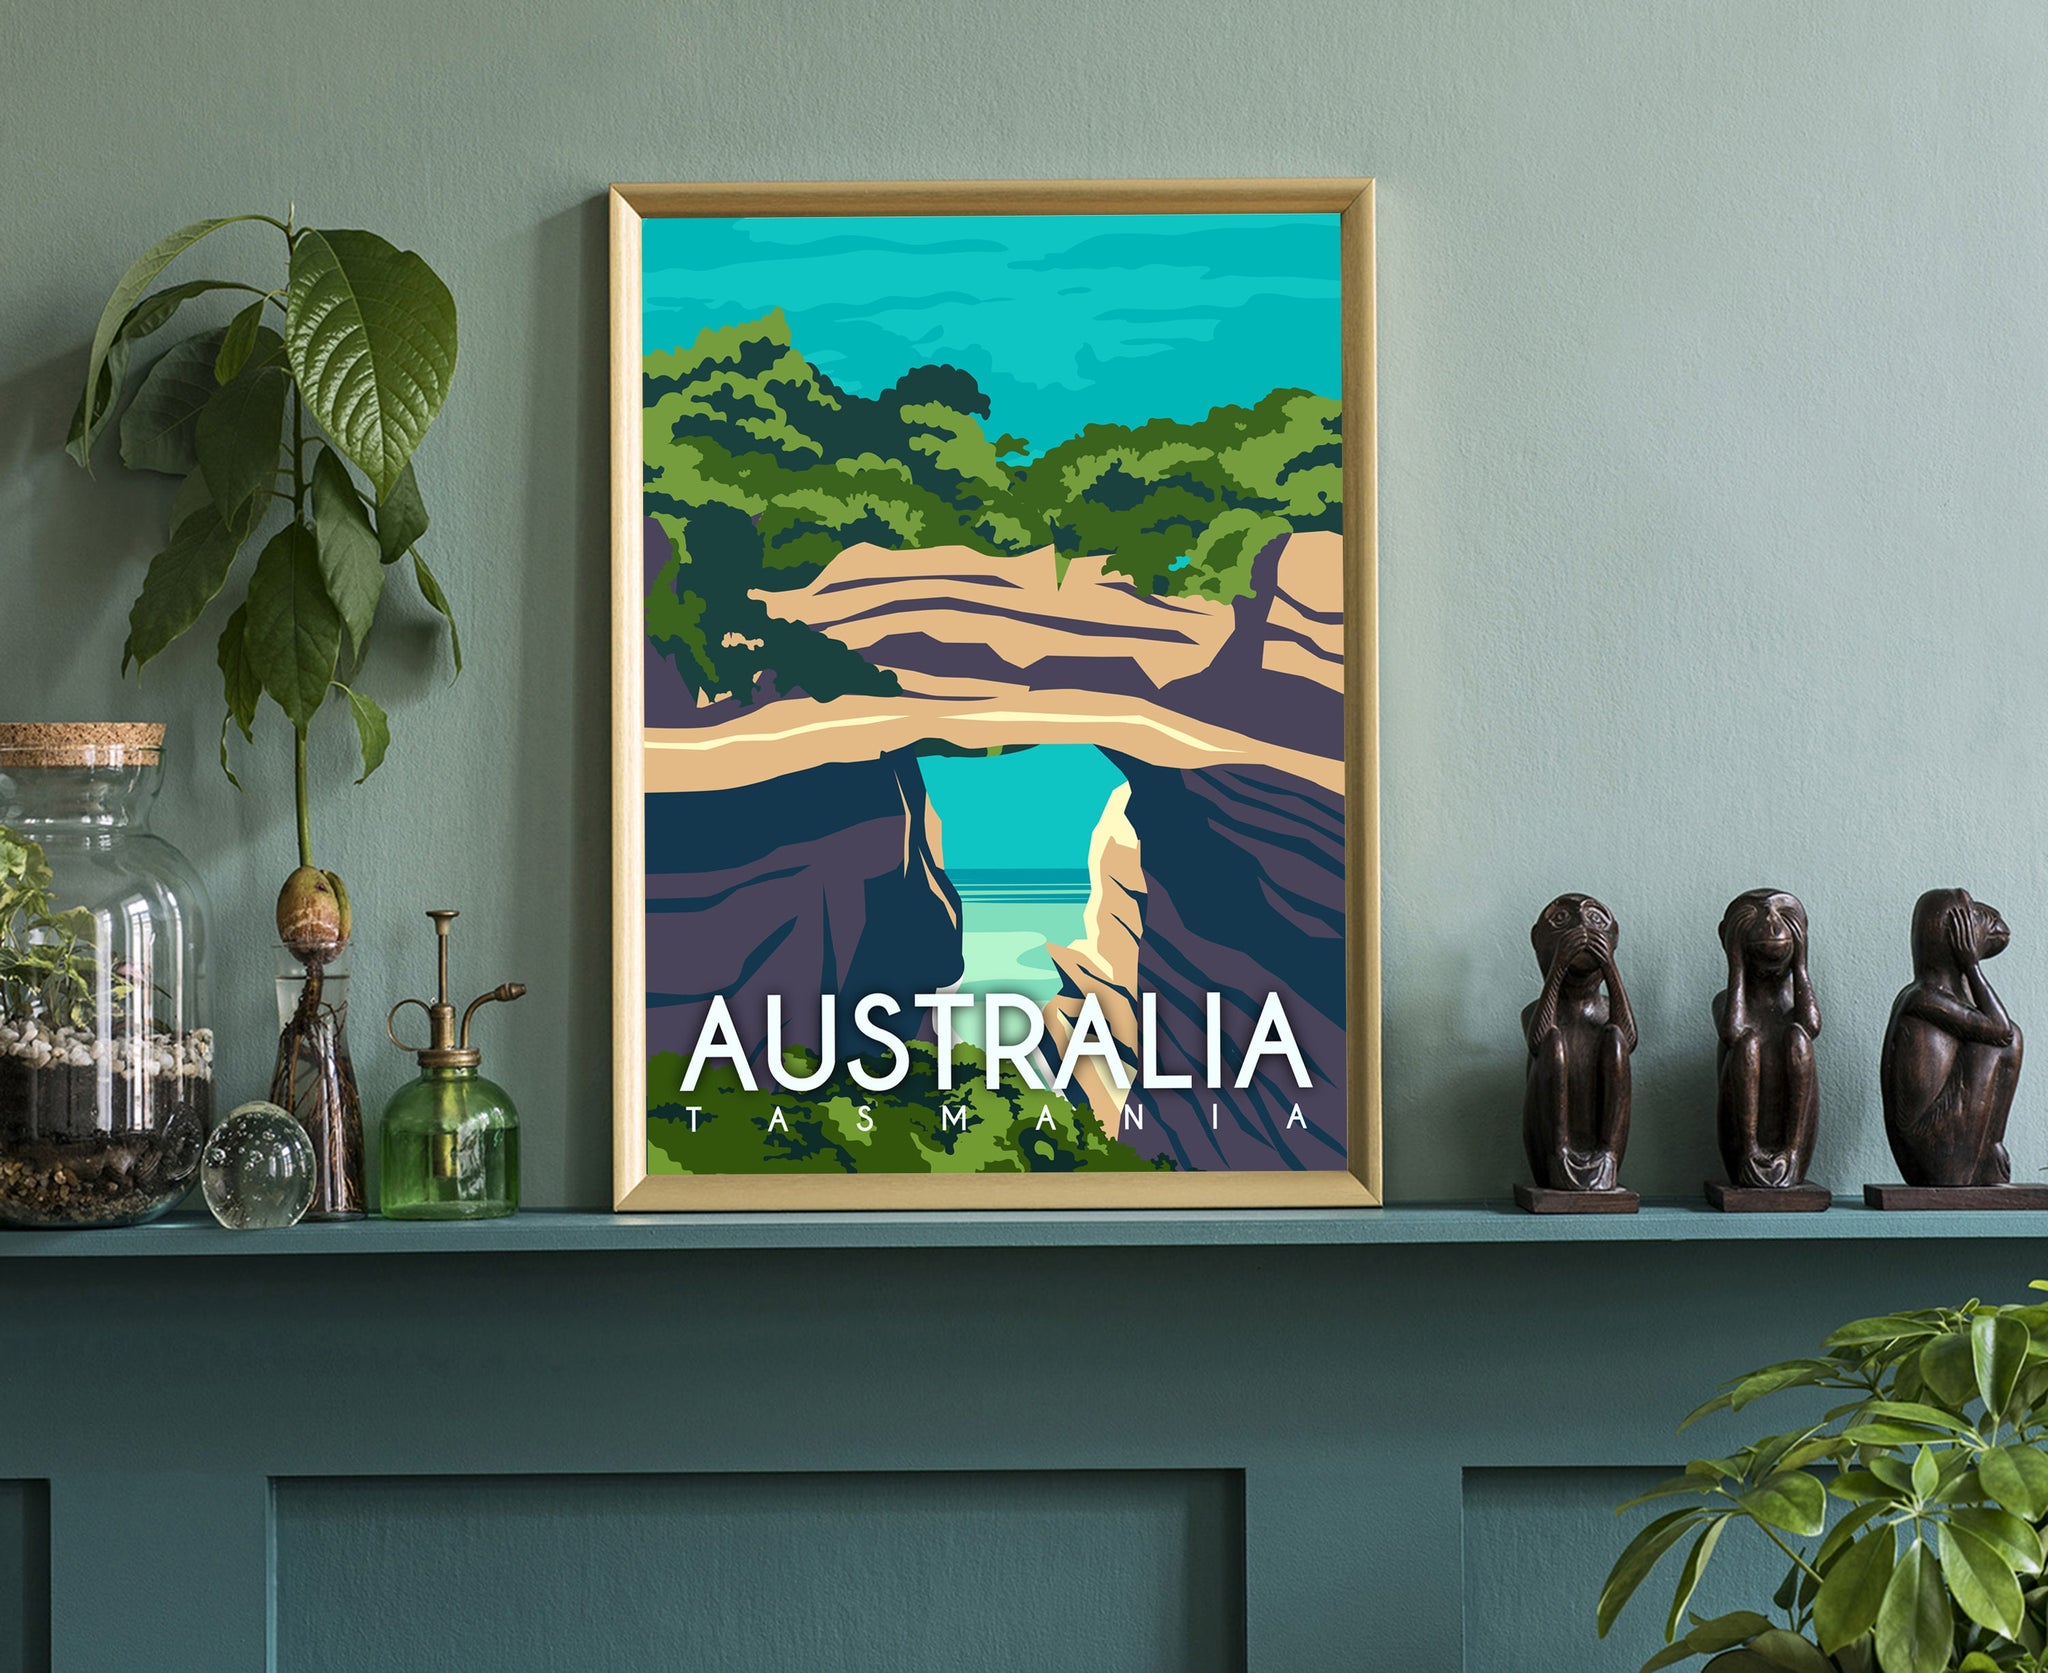 Australia retro style travel poster, Australia vintage rustic poster art, Home wall art, Office wall decoration, Australia map poster print